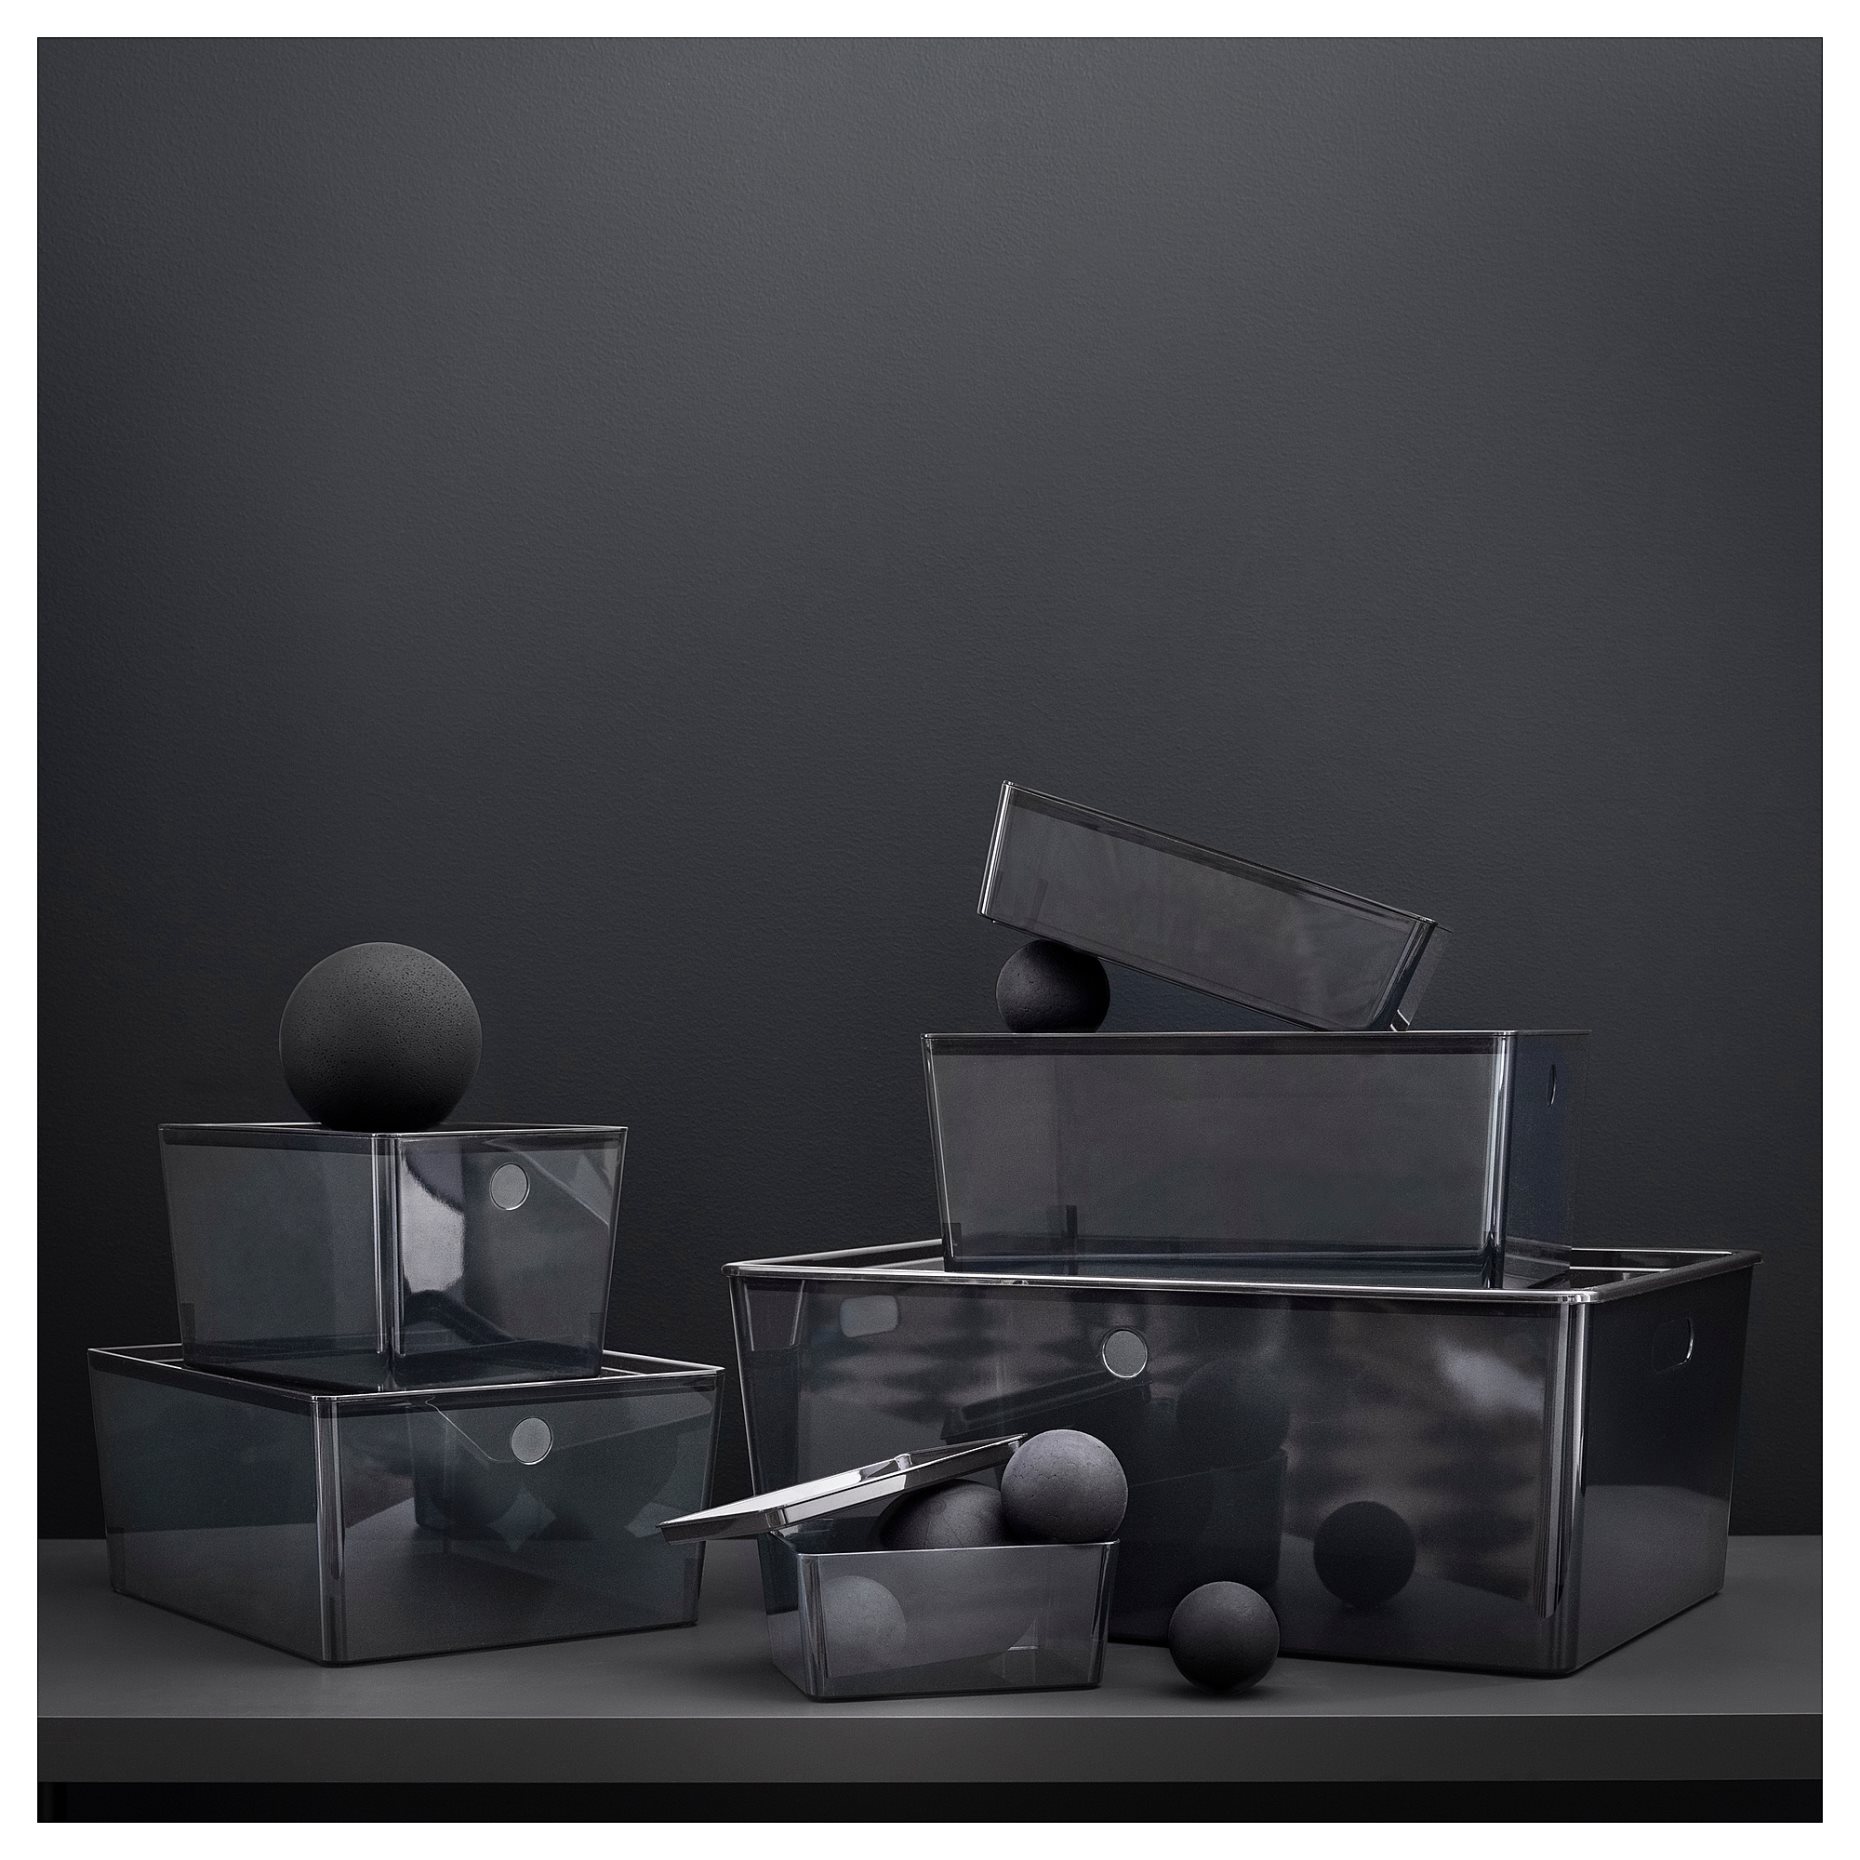 KUGGIS, box with lid/transparent, 18x26x8 cm, 305.140.36